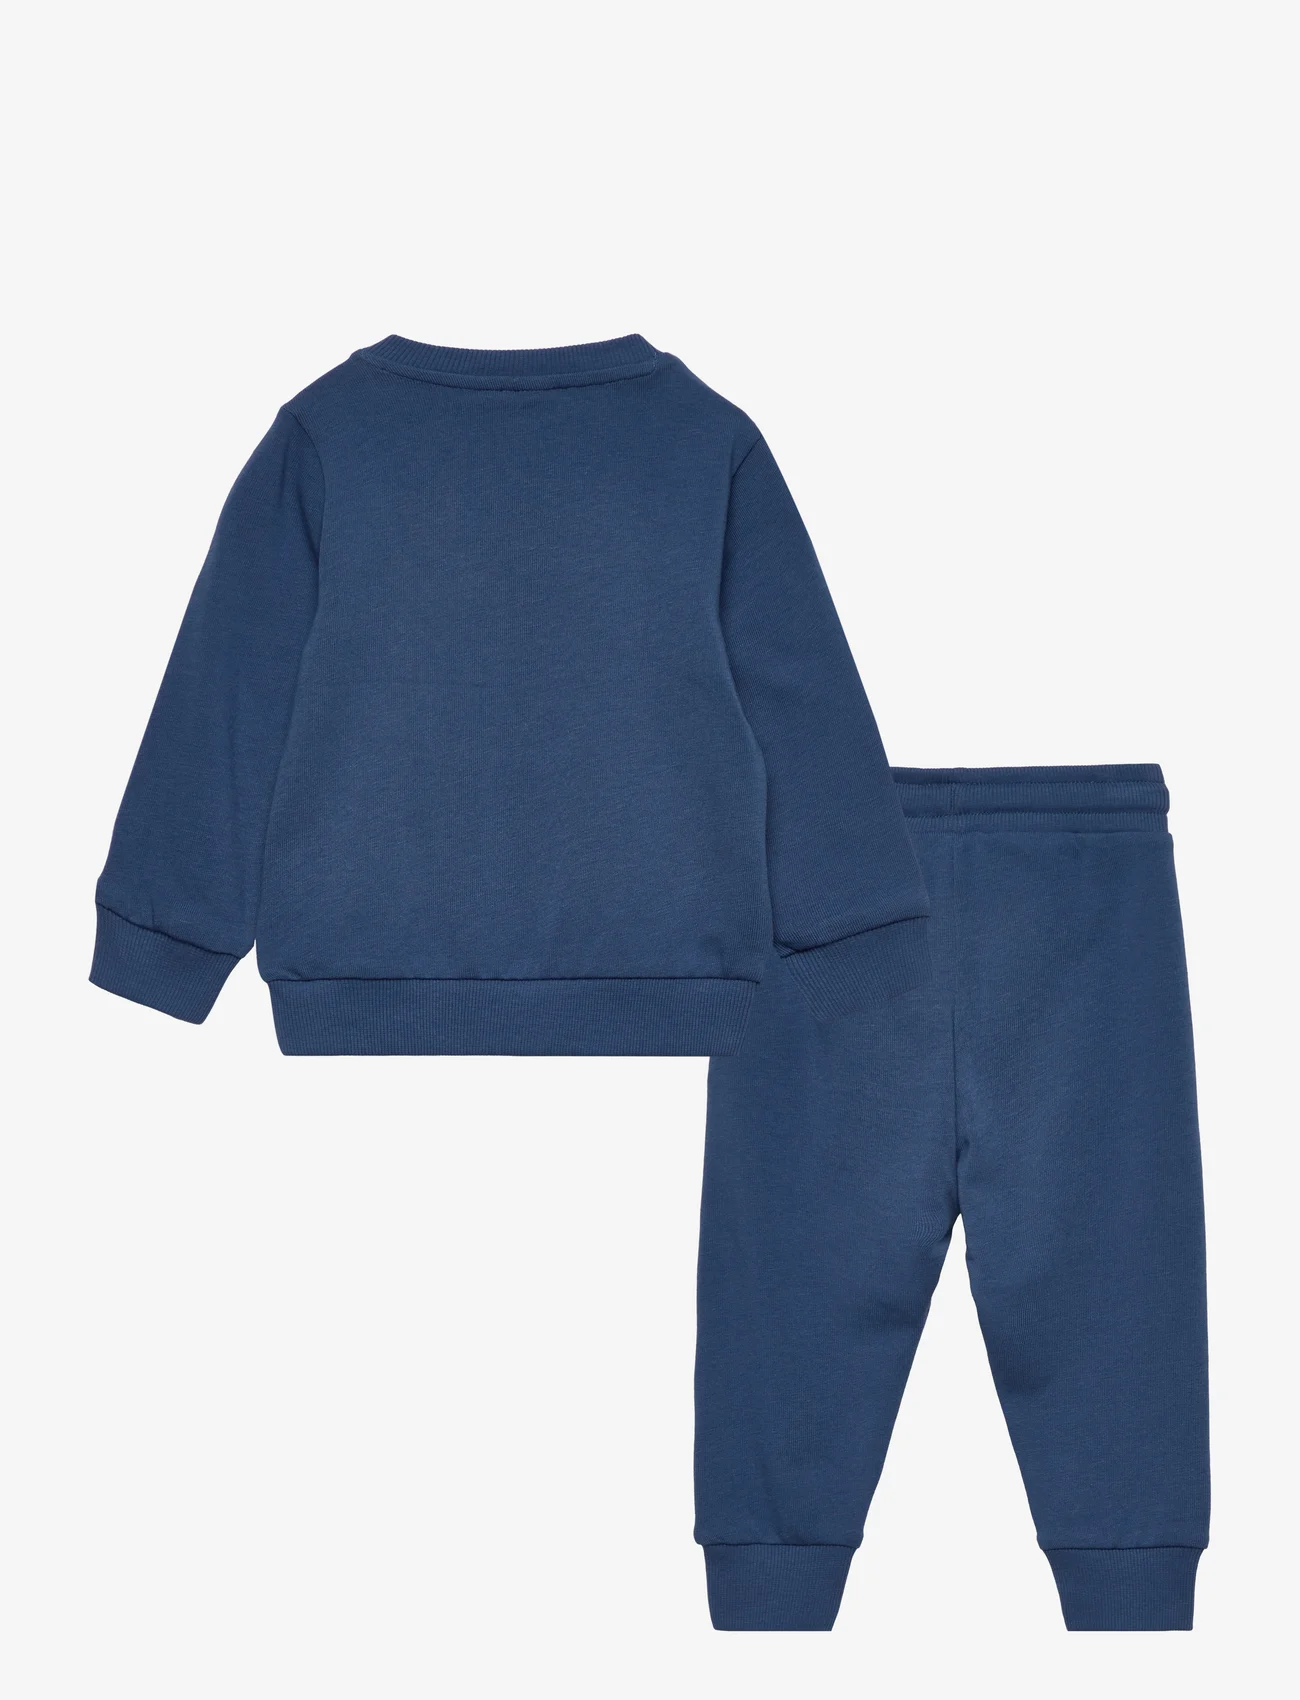 Hummel - hmlARINE CREWSUIT - sweatsuits - ensign blue - 1